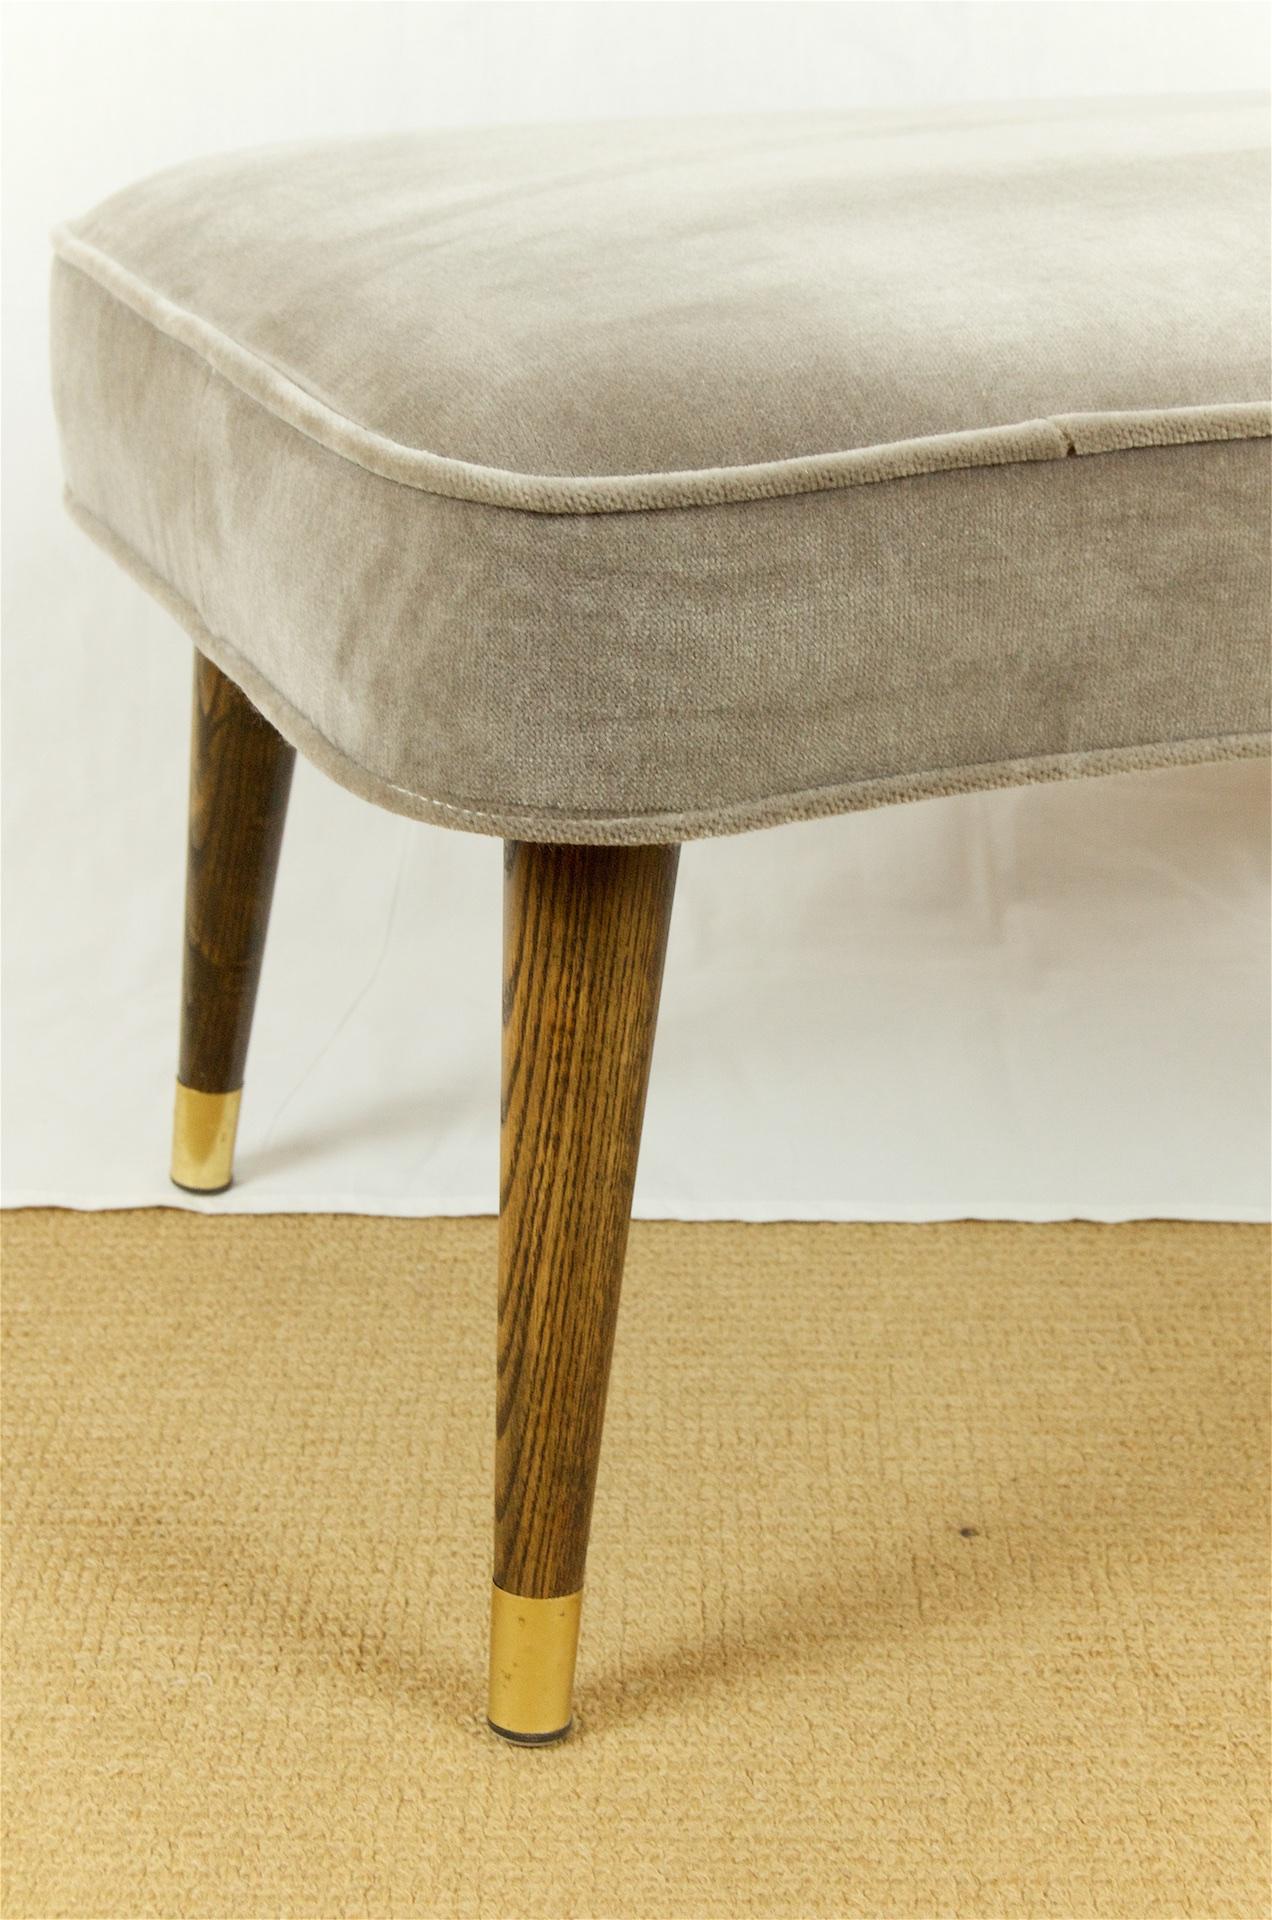 Mid-20th Century Midcentury Velvet and Wood Bench with Ebonized Legs